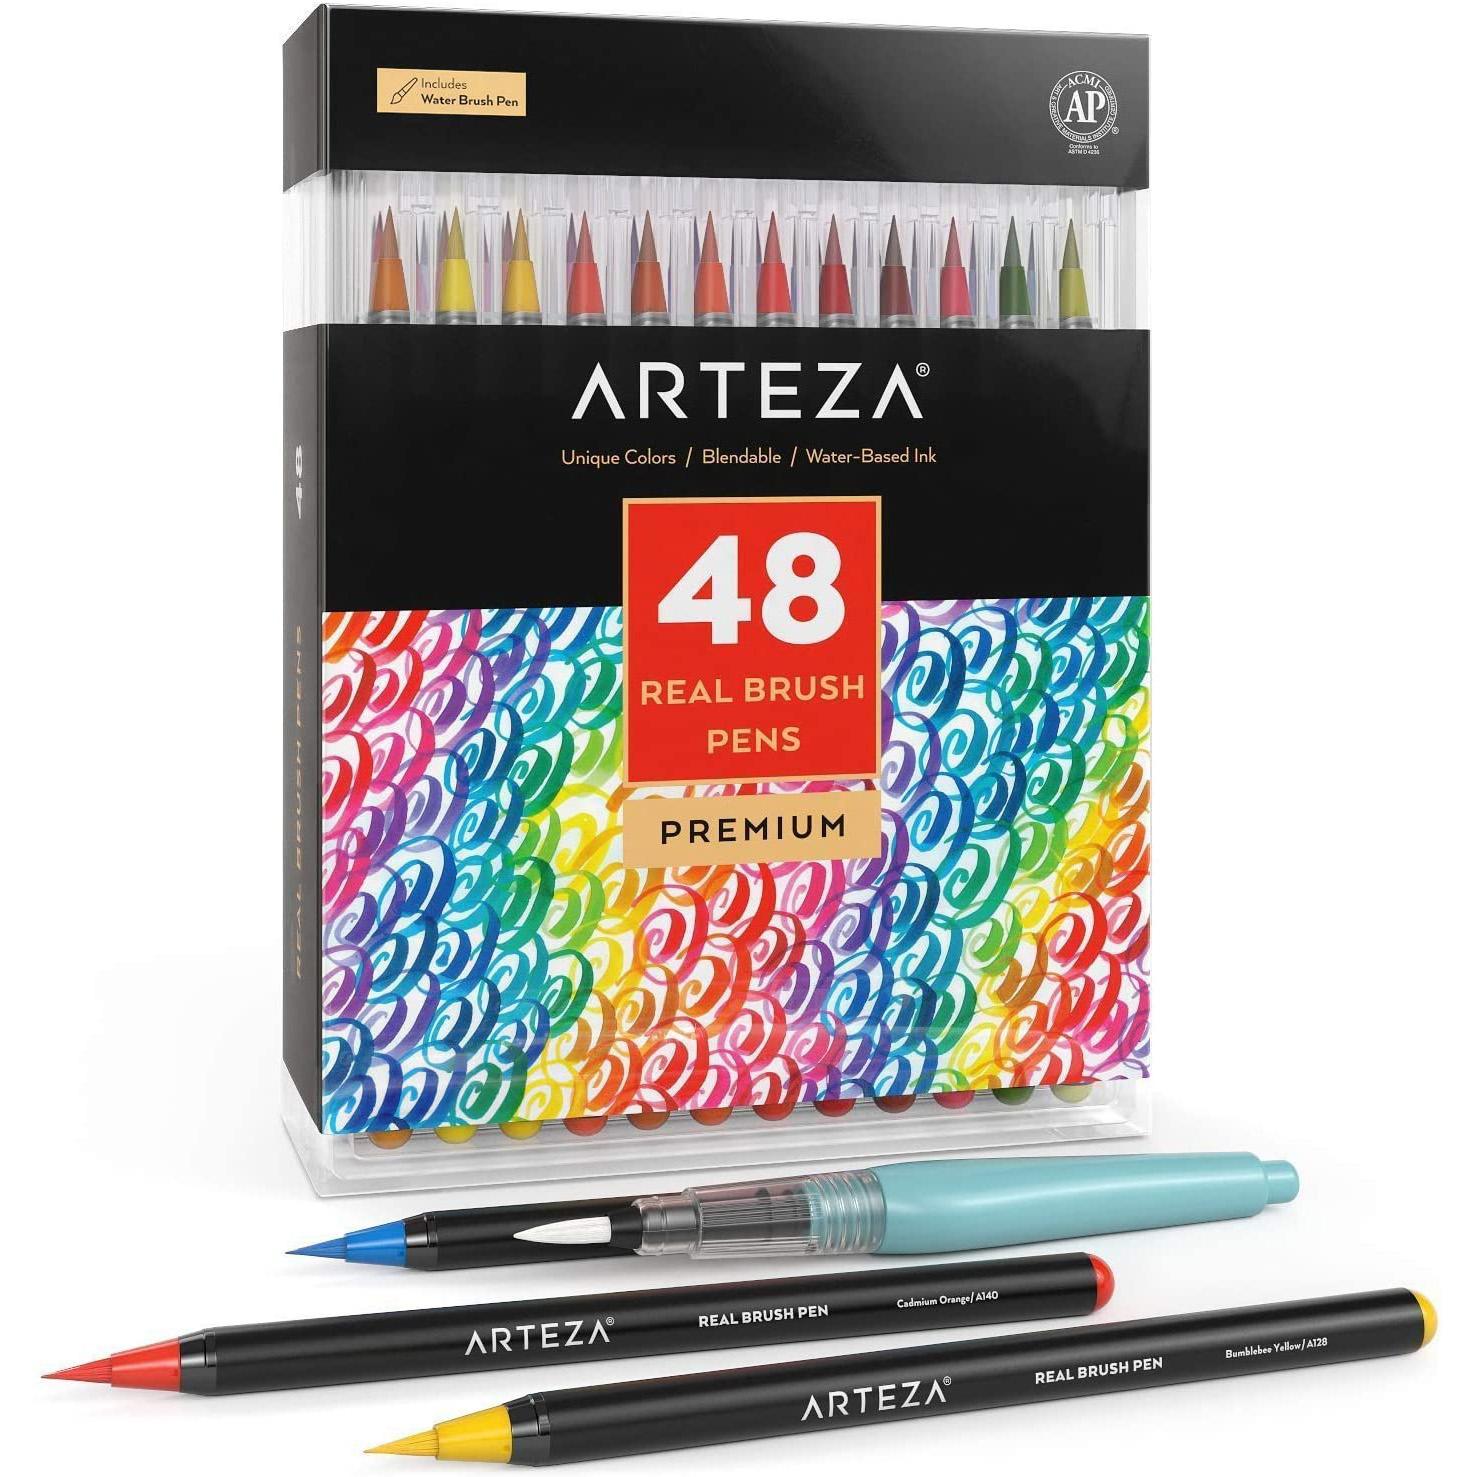 Arteza Real Brush 48 Colors Pens for $27.99 Shipped